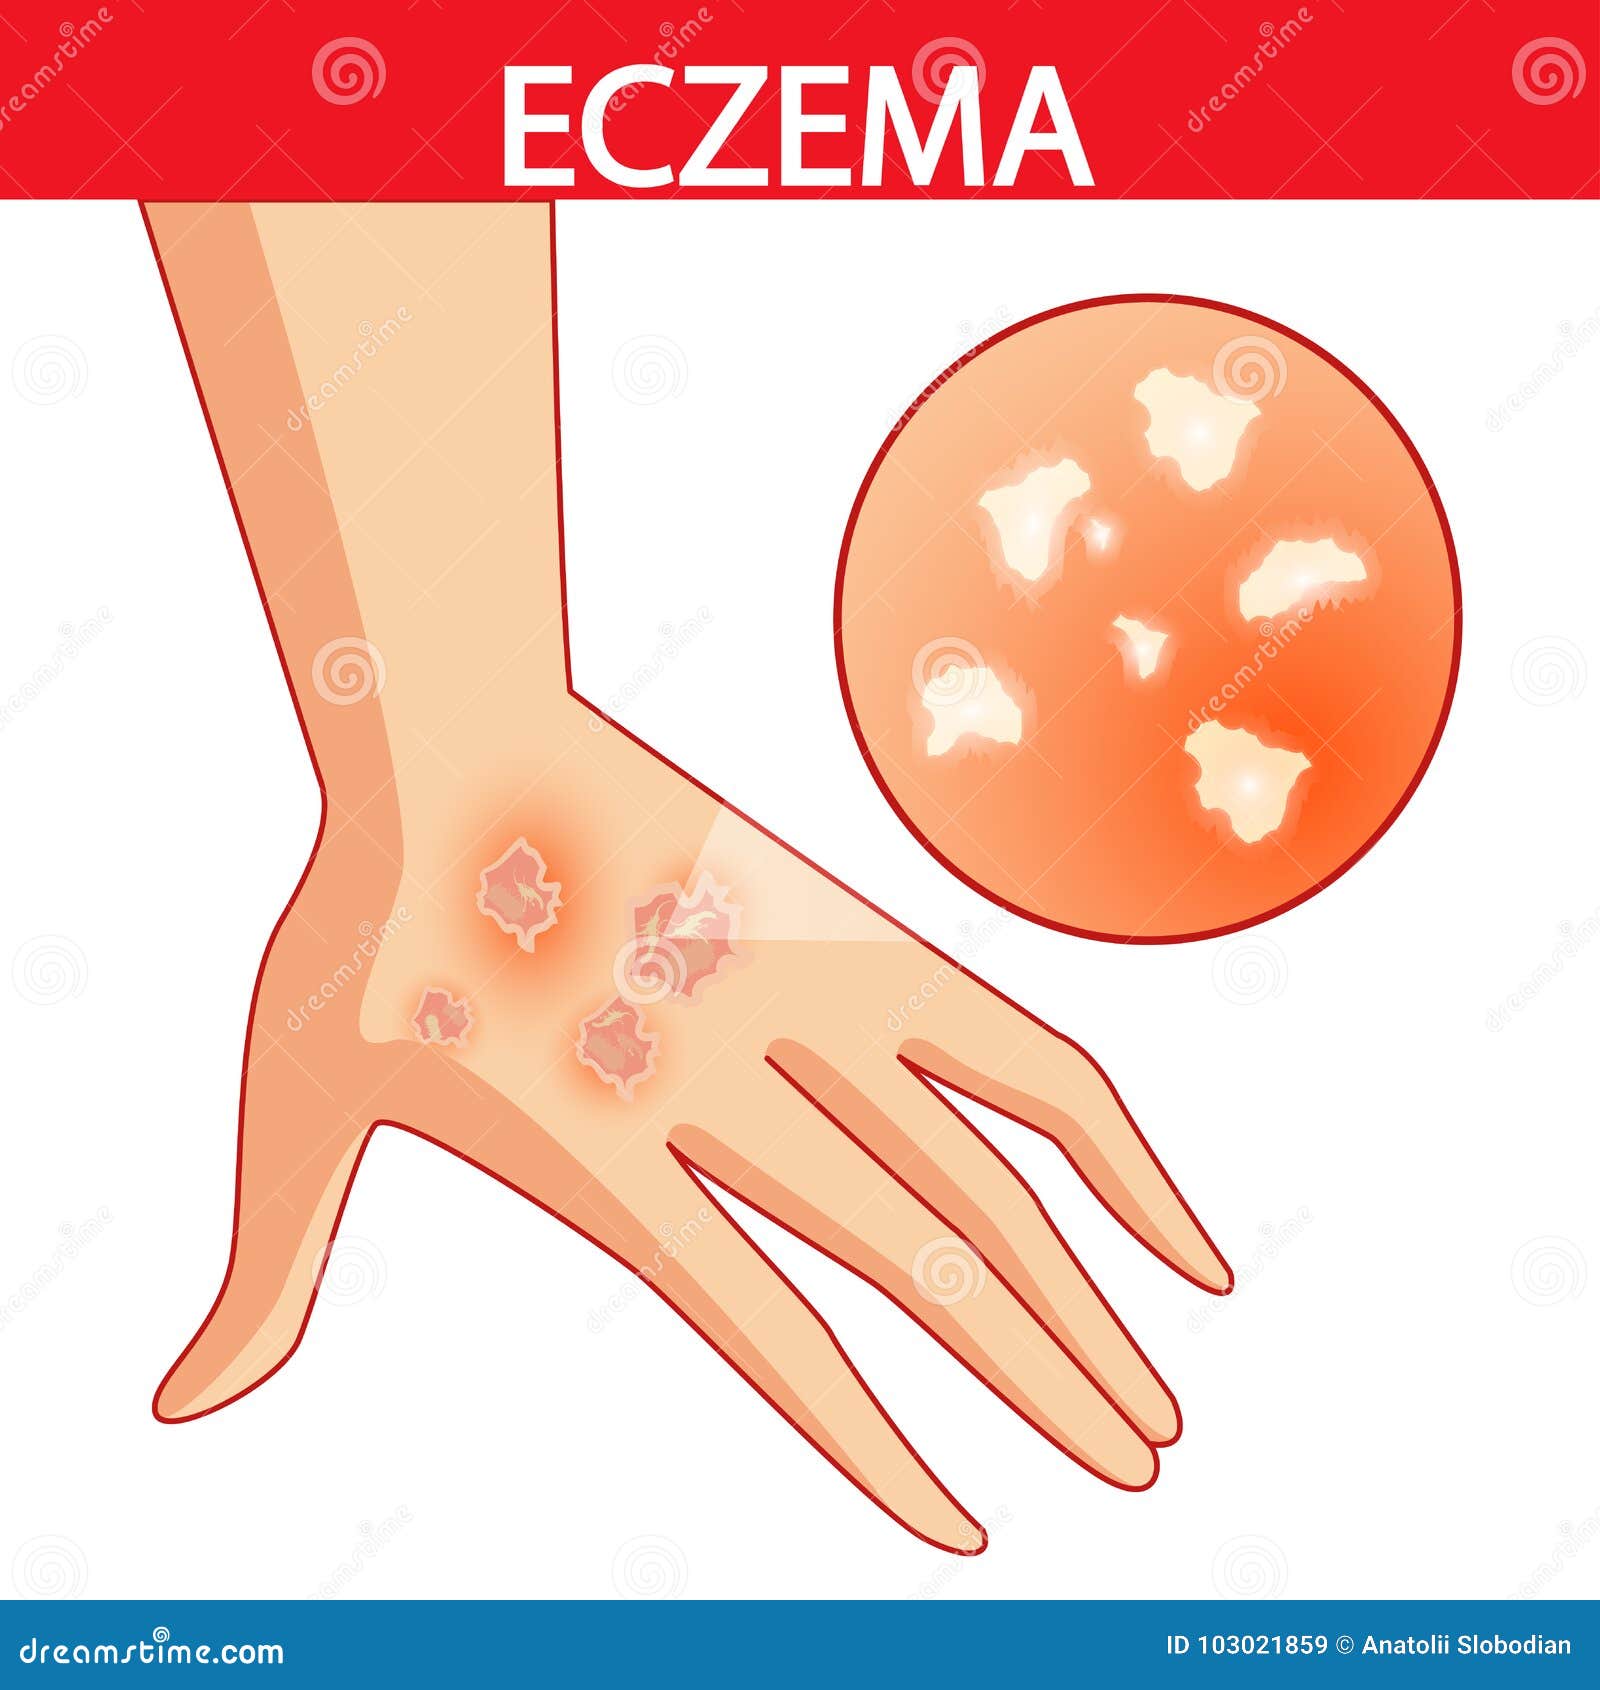 eczema of the hands psoriasis, dermatitis, dermatology, eczema, skin, treatment,